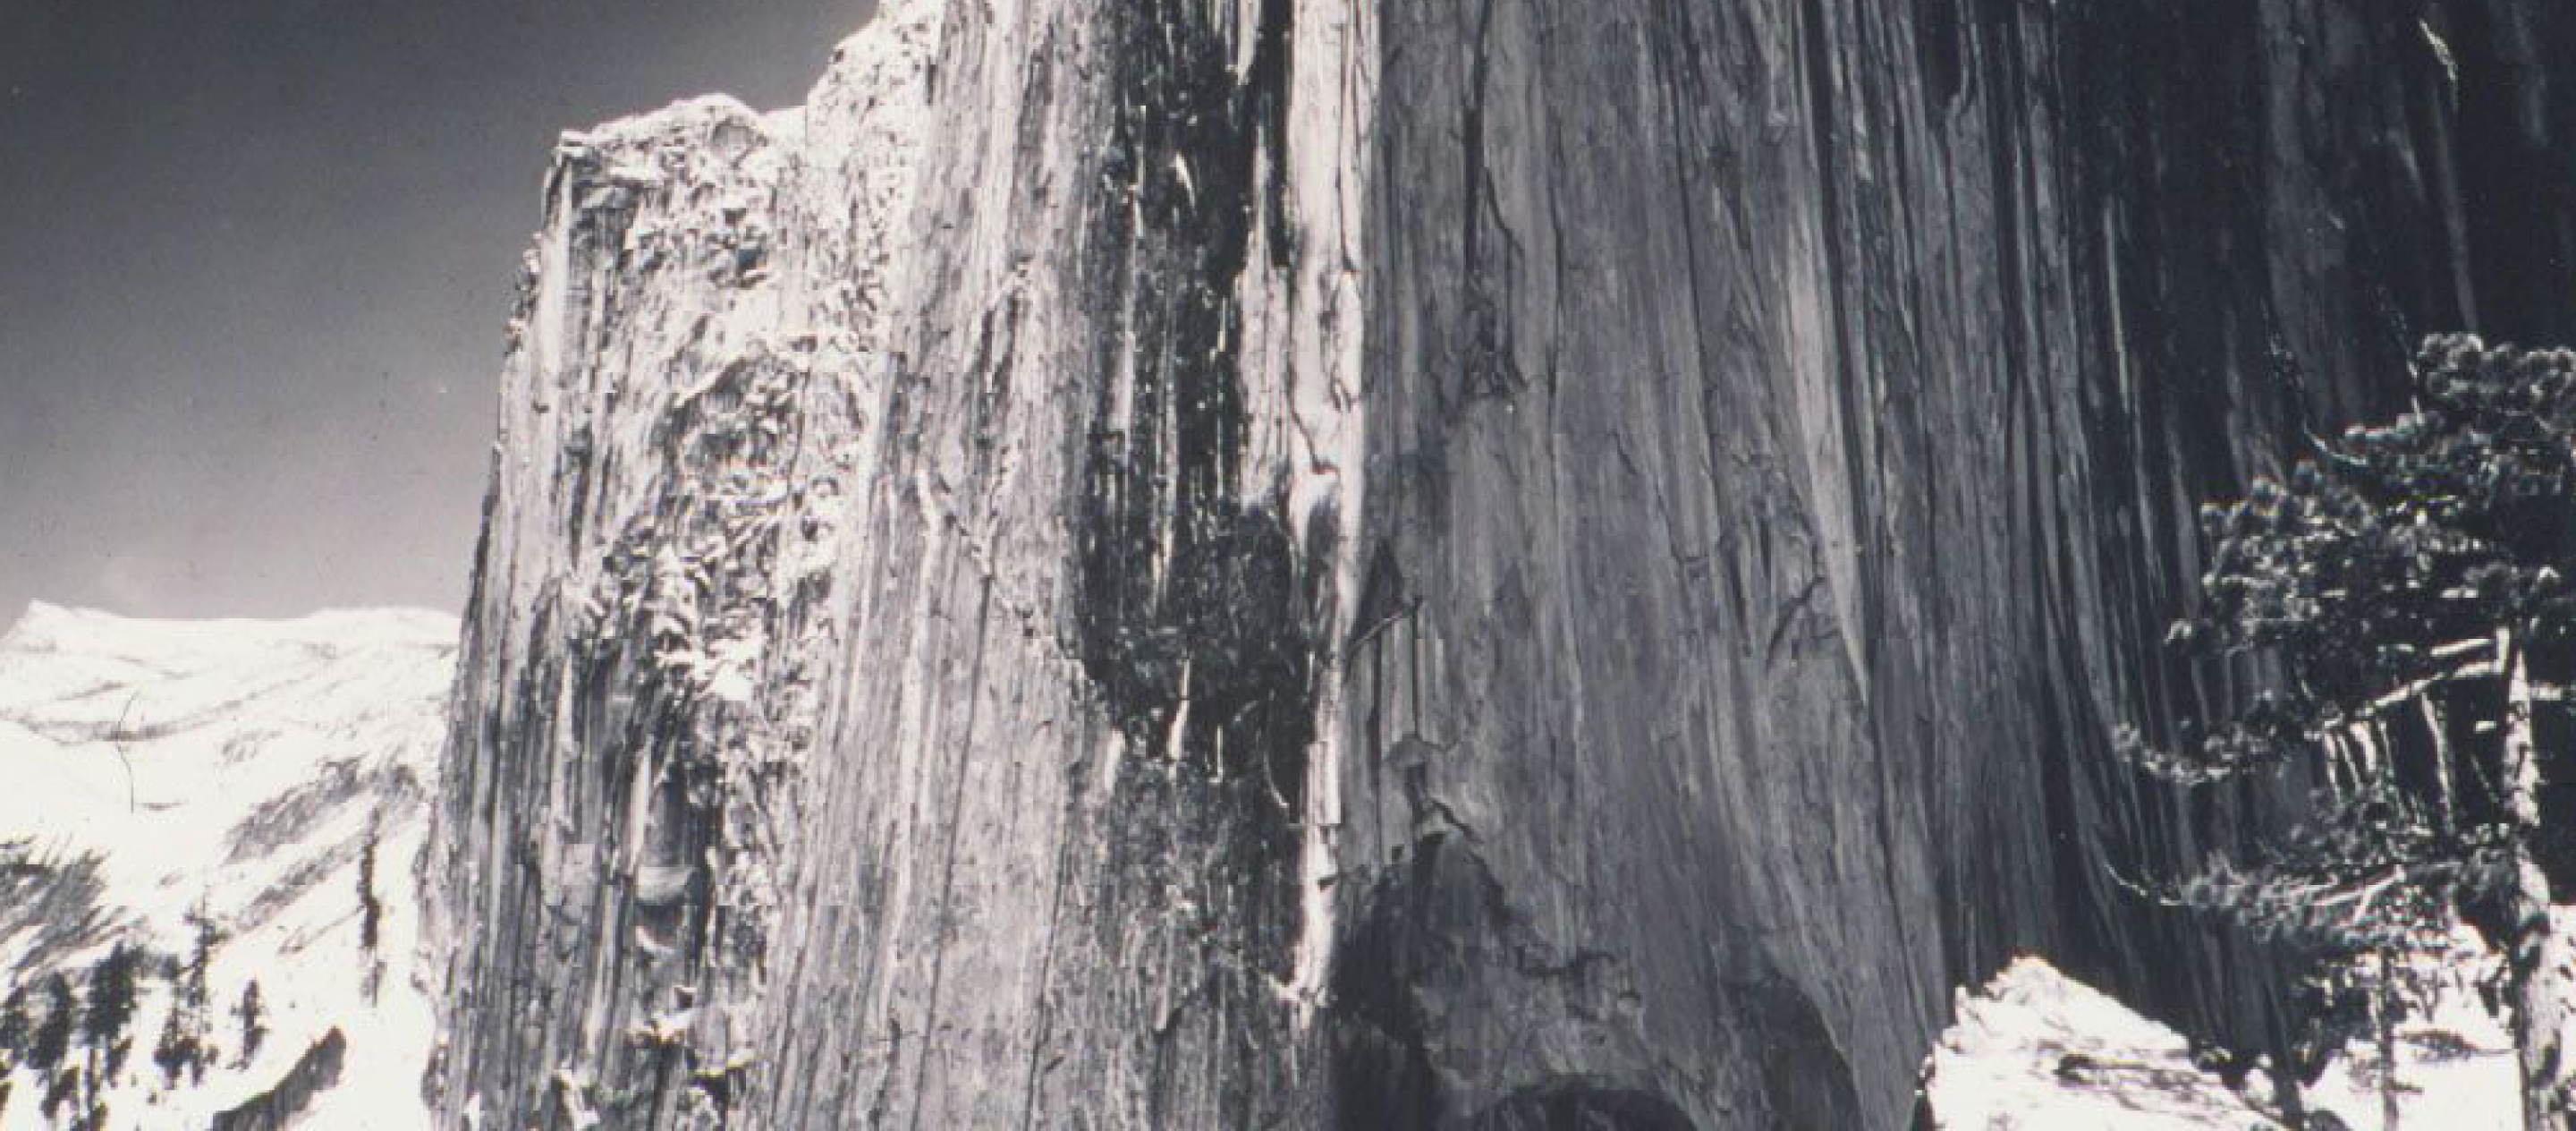 One Pic EP.01 ภาพแลนด์สเคปของ Ansel Adams ที่นำไปสู่อุทยานแห่งชาติแห่งใหม่ของอเมริกา